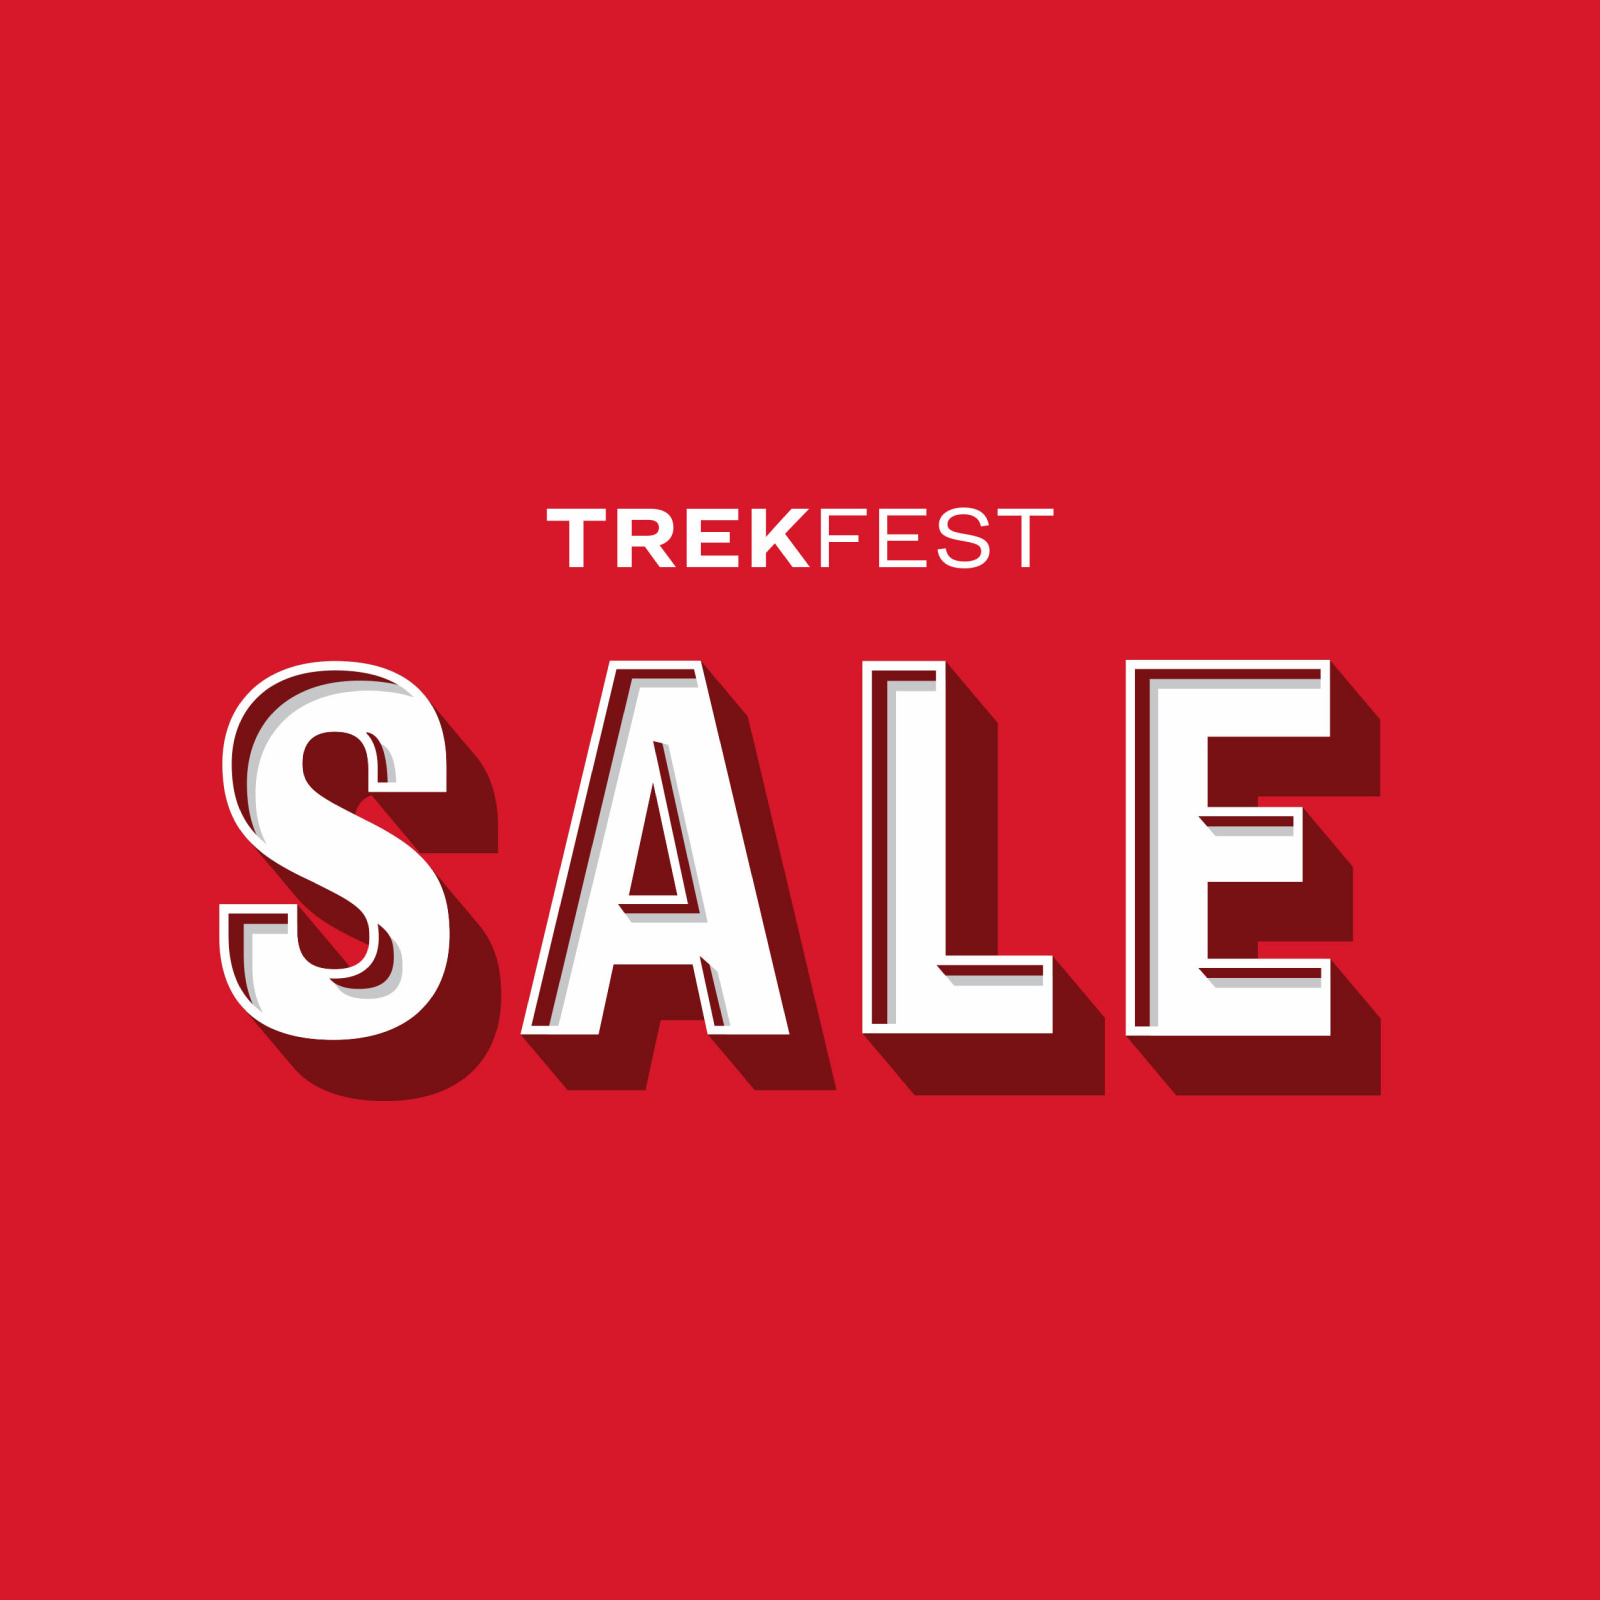 TrekFest Sale Graphic